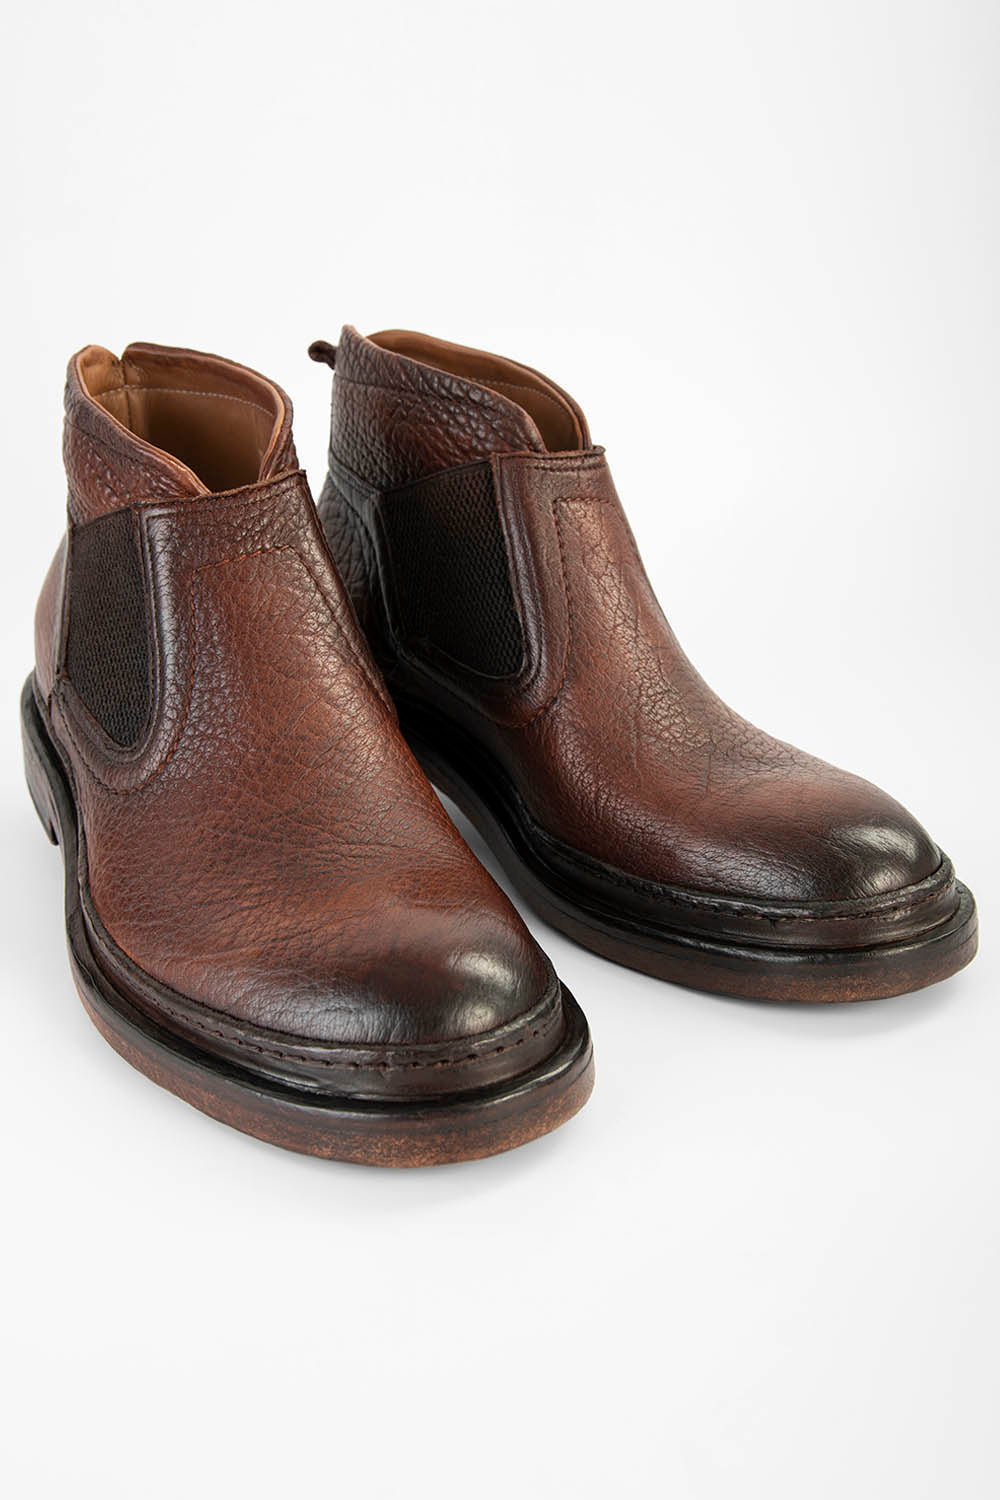 YORK brown welted chelsea boots | untamed UNTAMED STREET